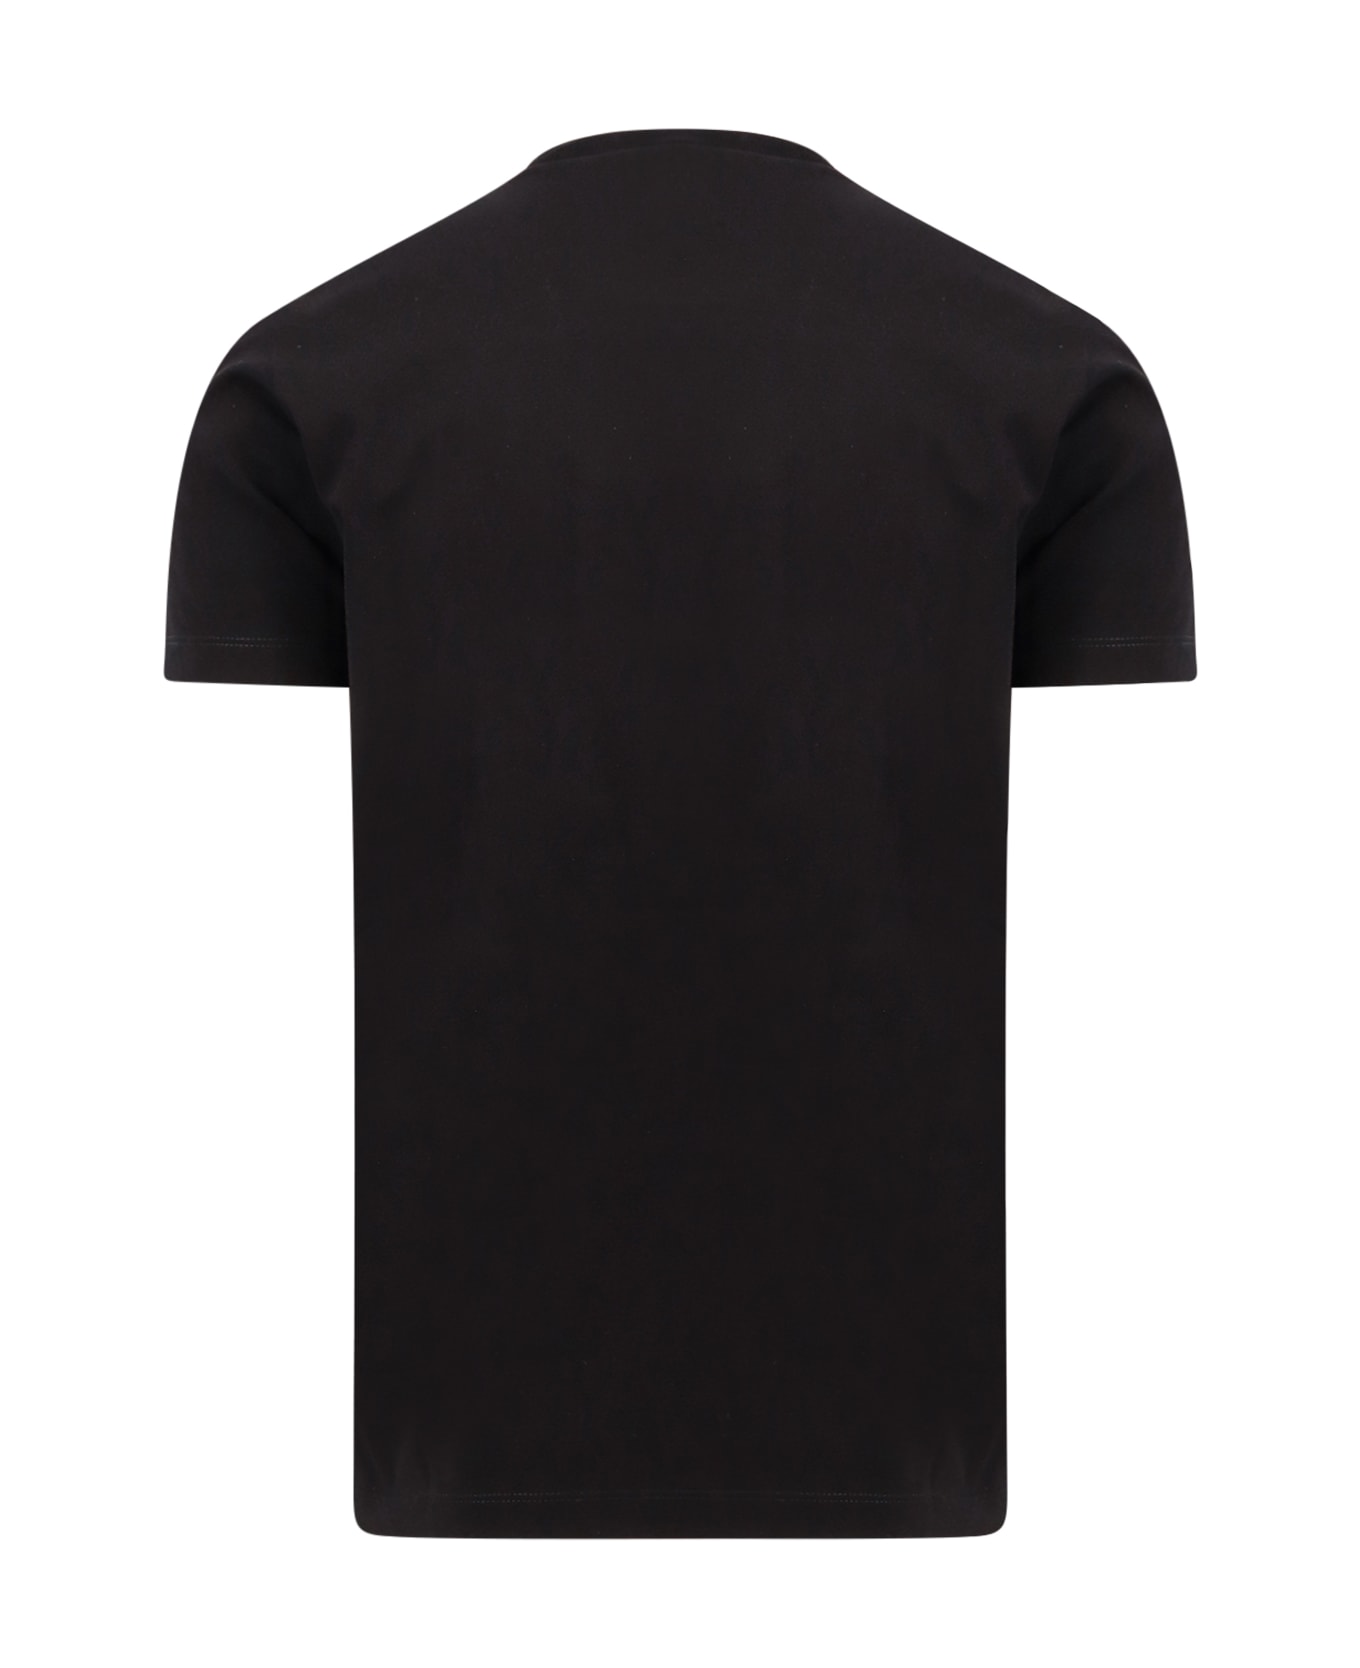 Dsquared2 Icon Blur Cool Fit T-shirt - Black シャツ